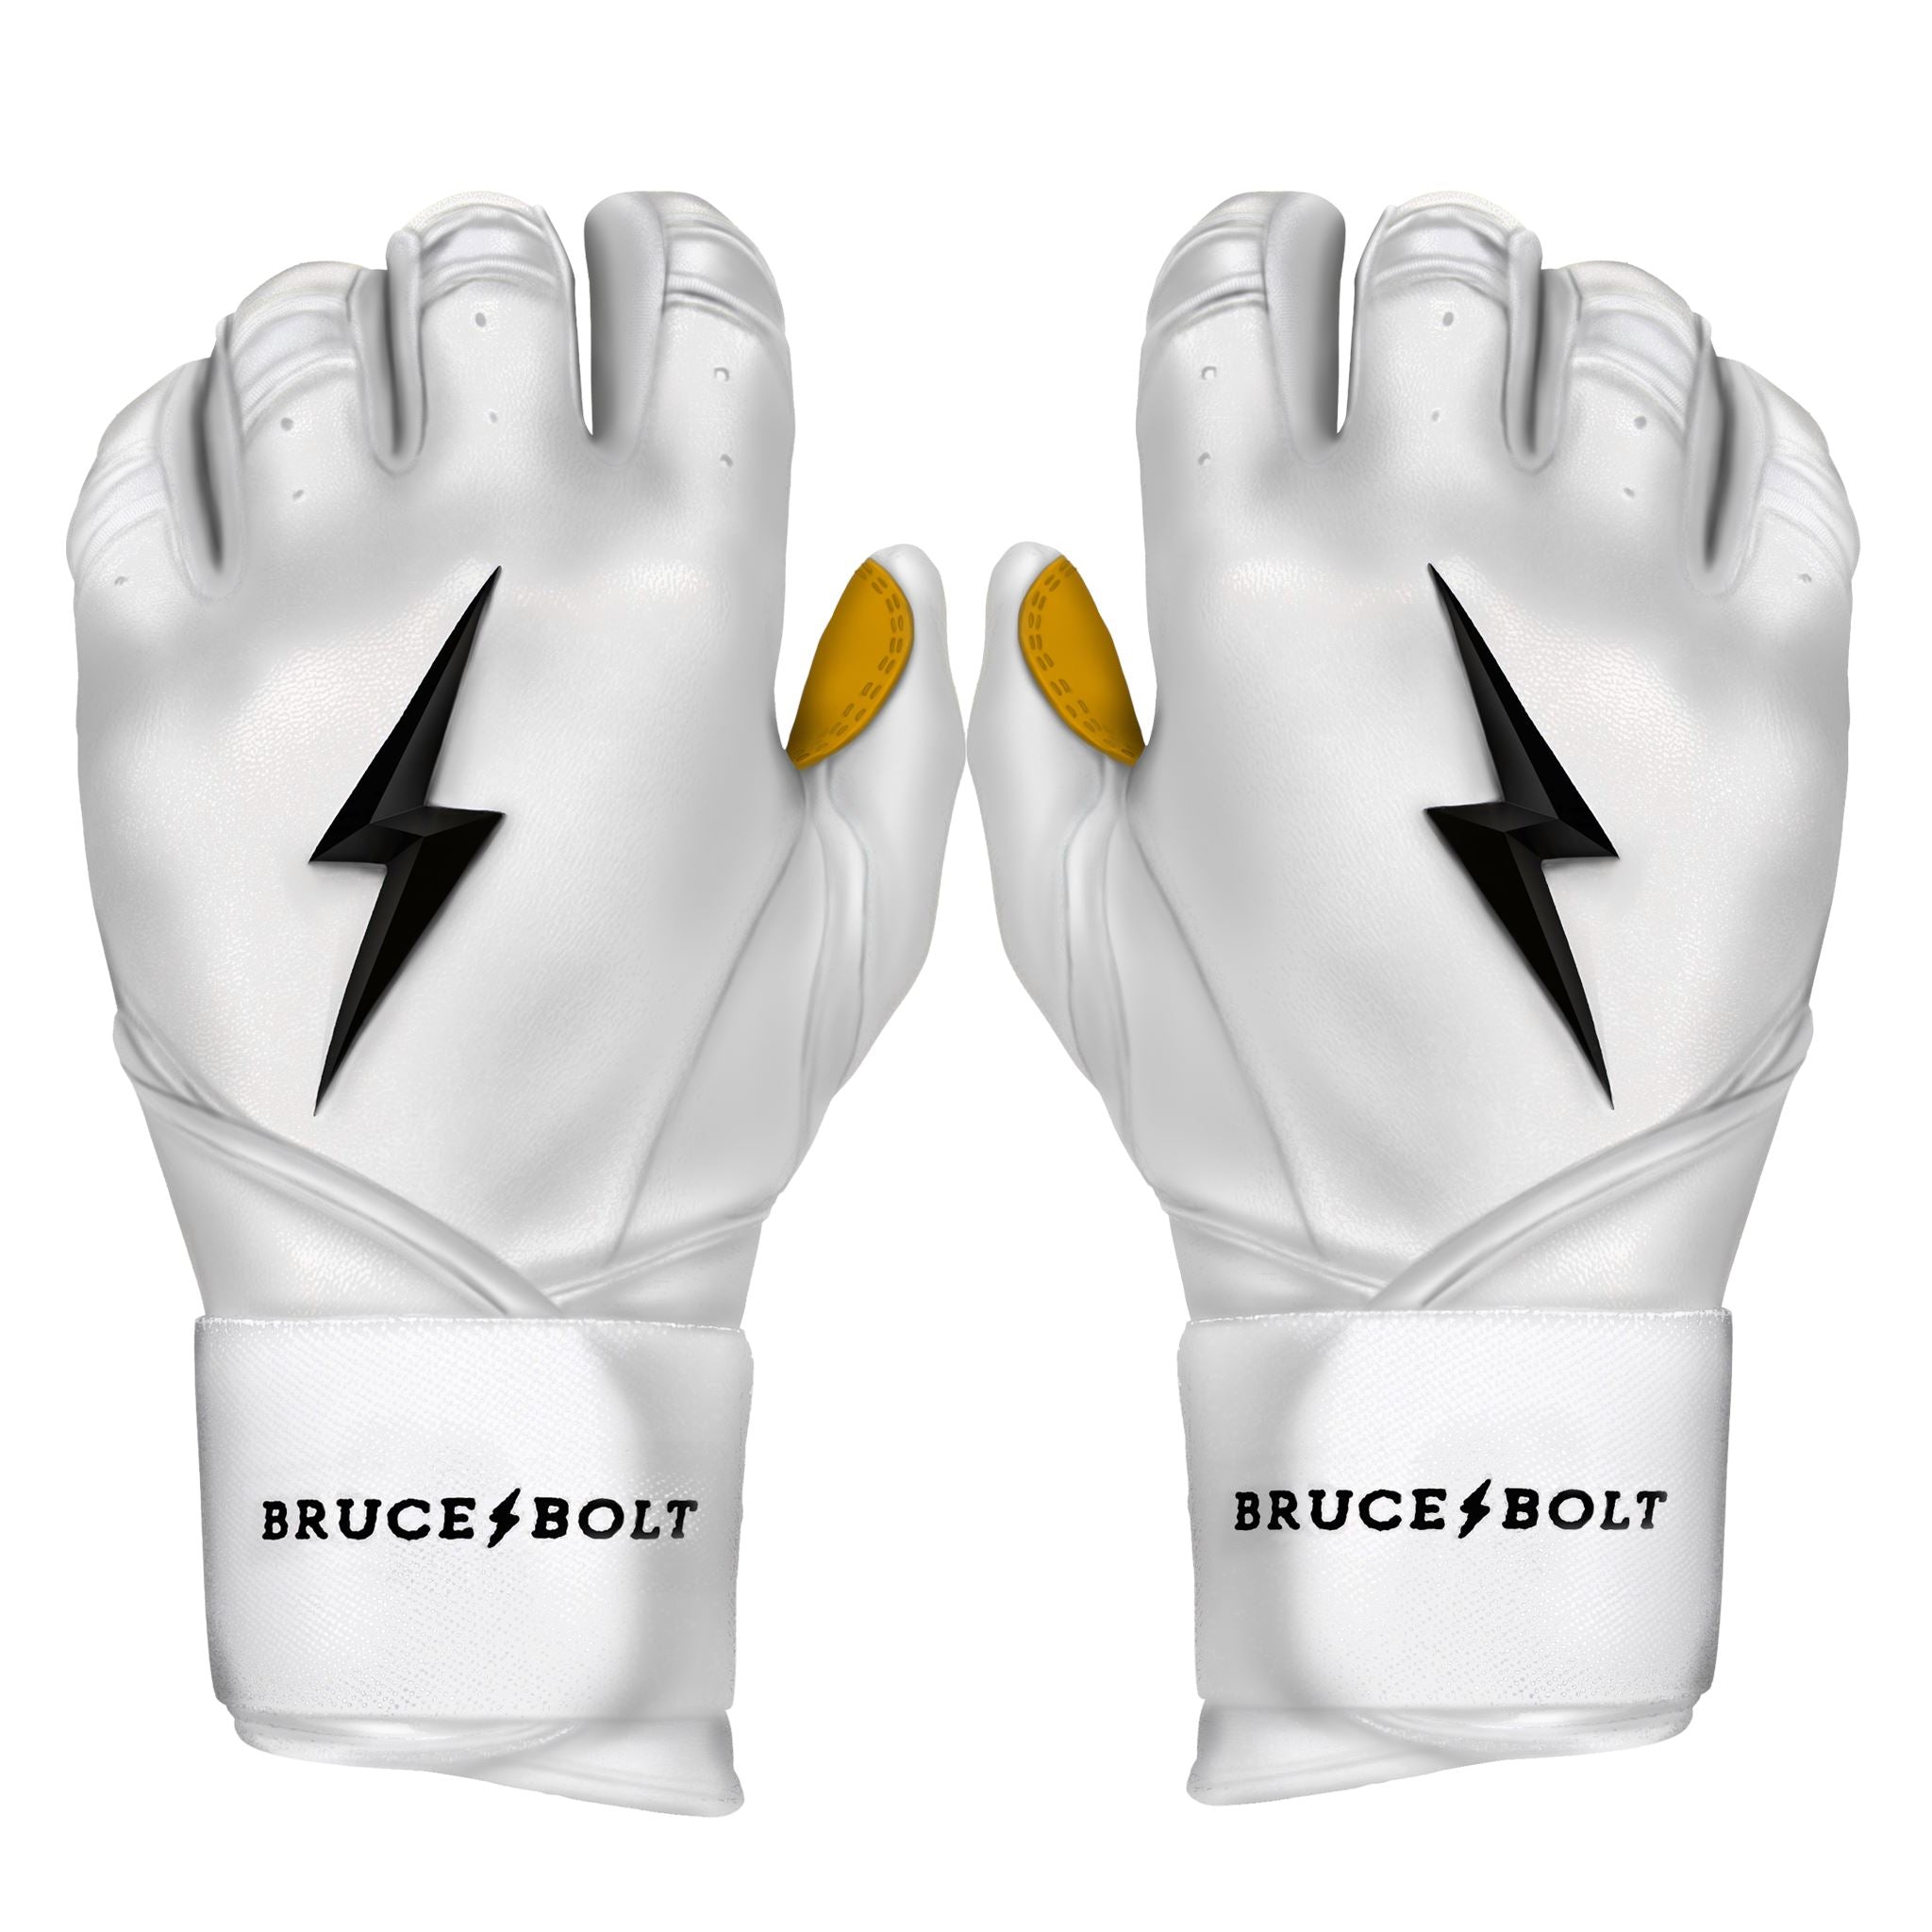 Bruce Bolt Premium Pro Long Cuff Batting Gloves White